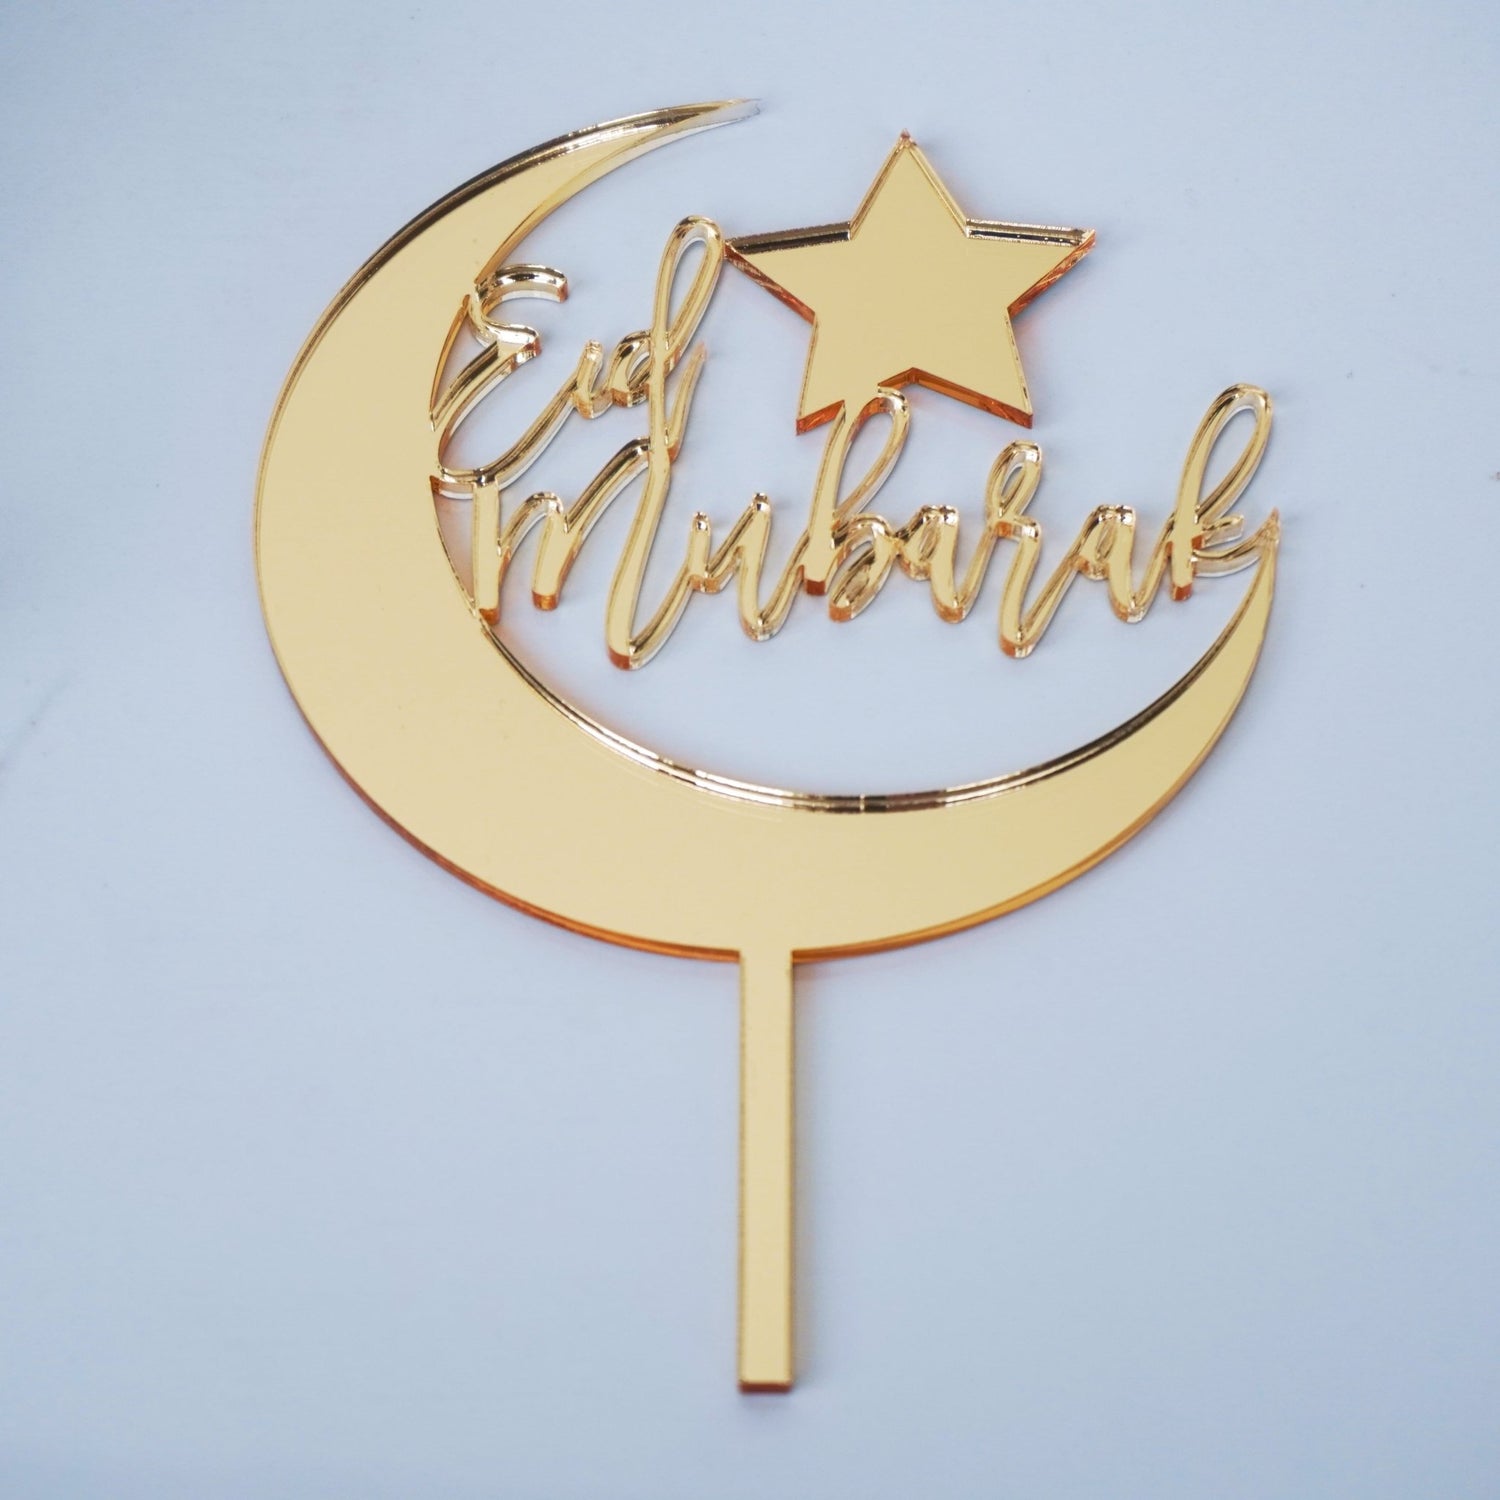 Eid Mubarak cake decorations